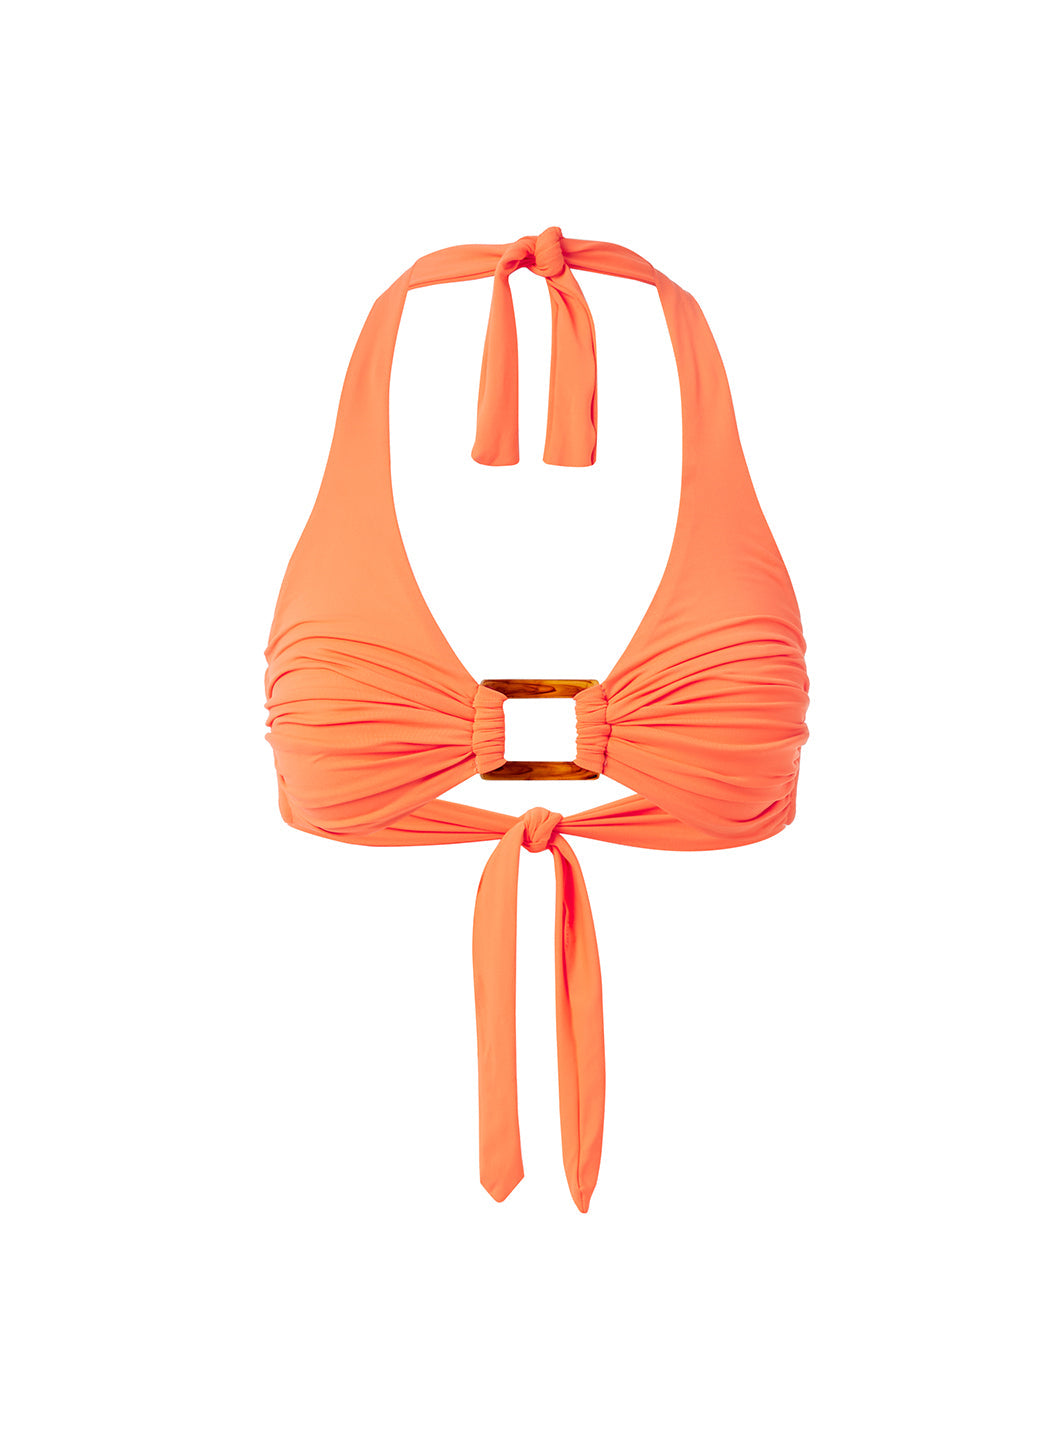 paris-orange-bikini-top_cutout